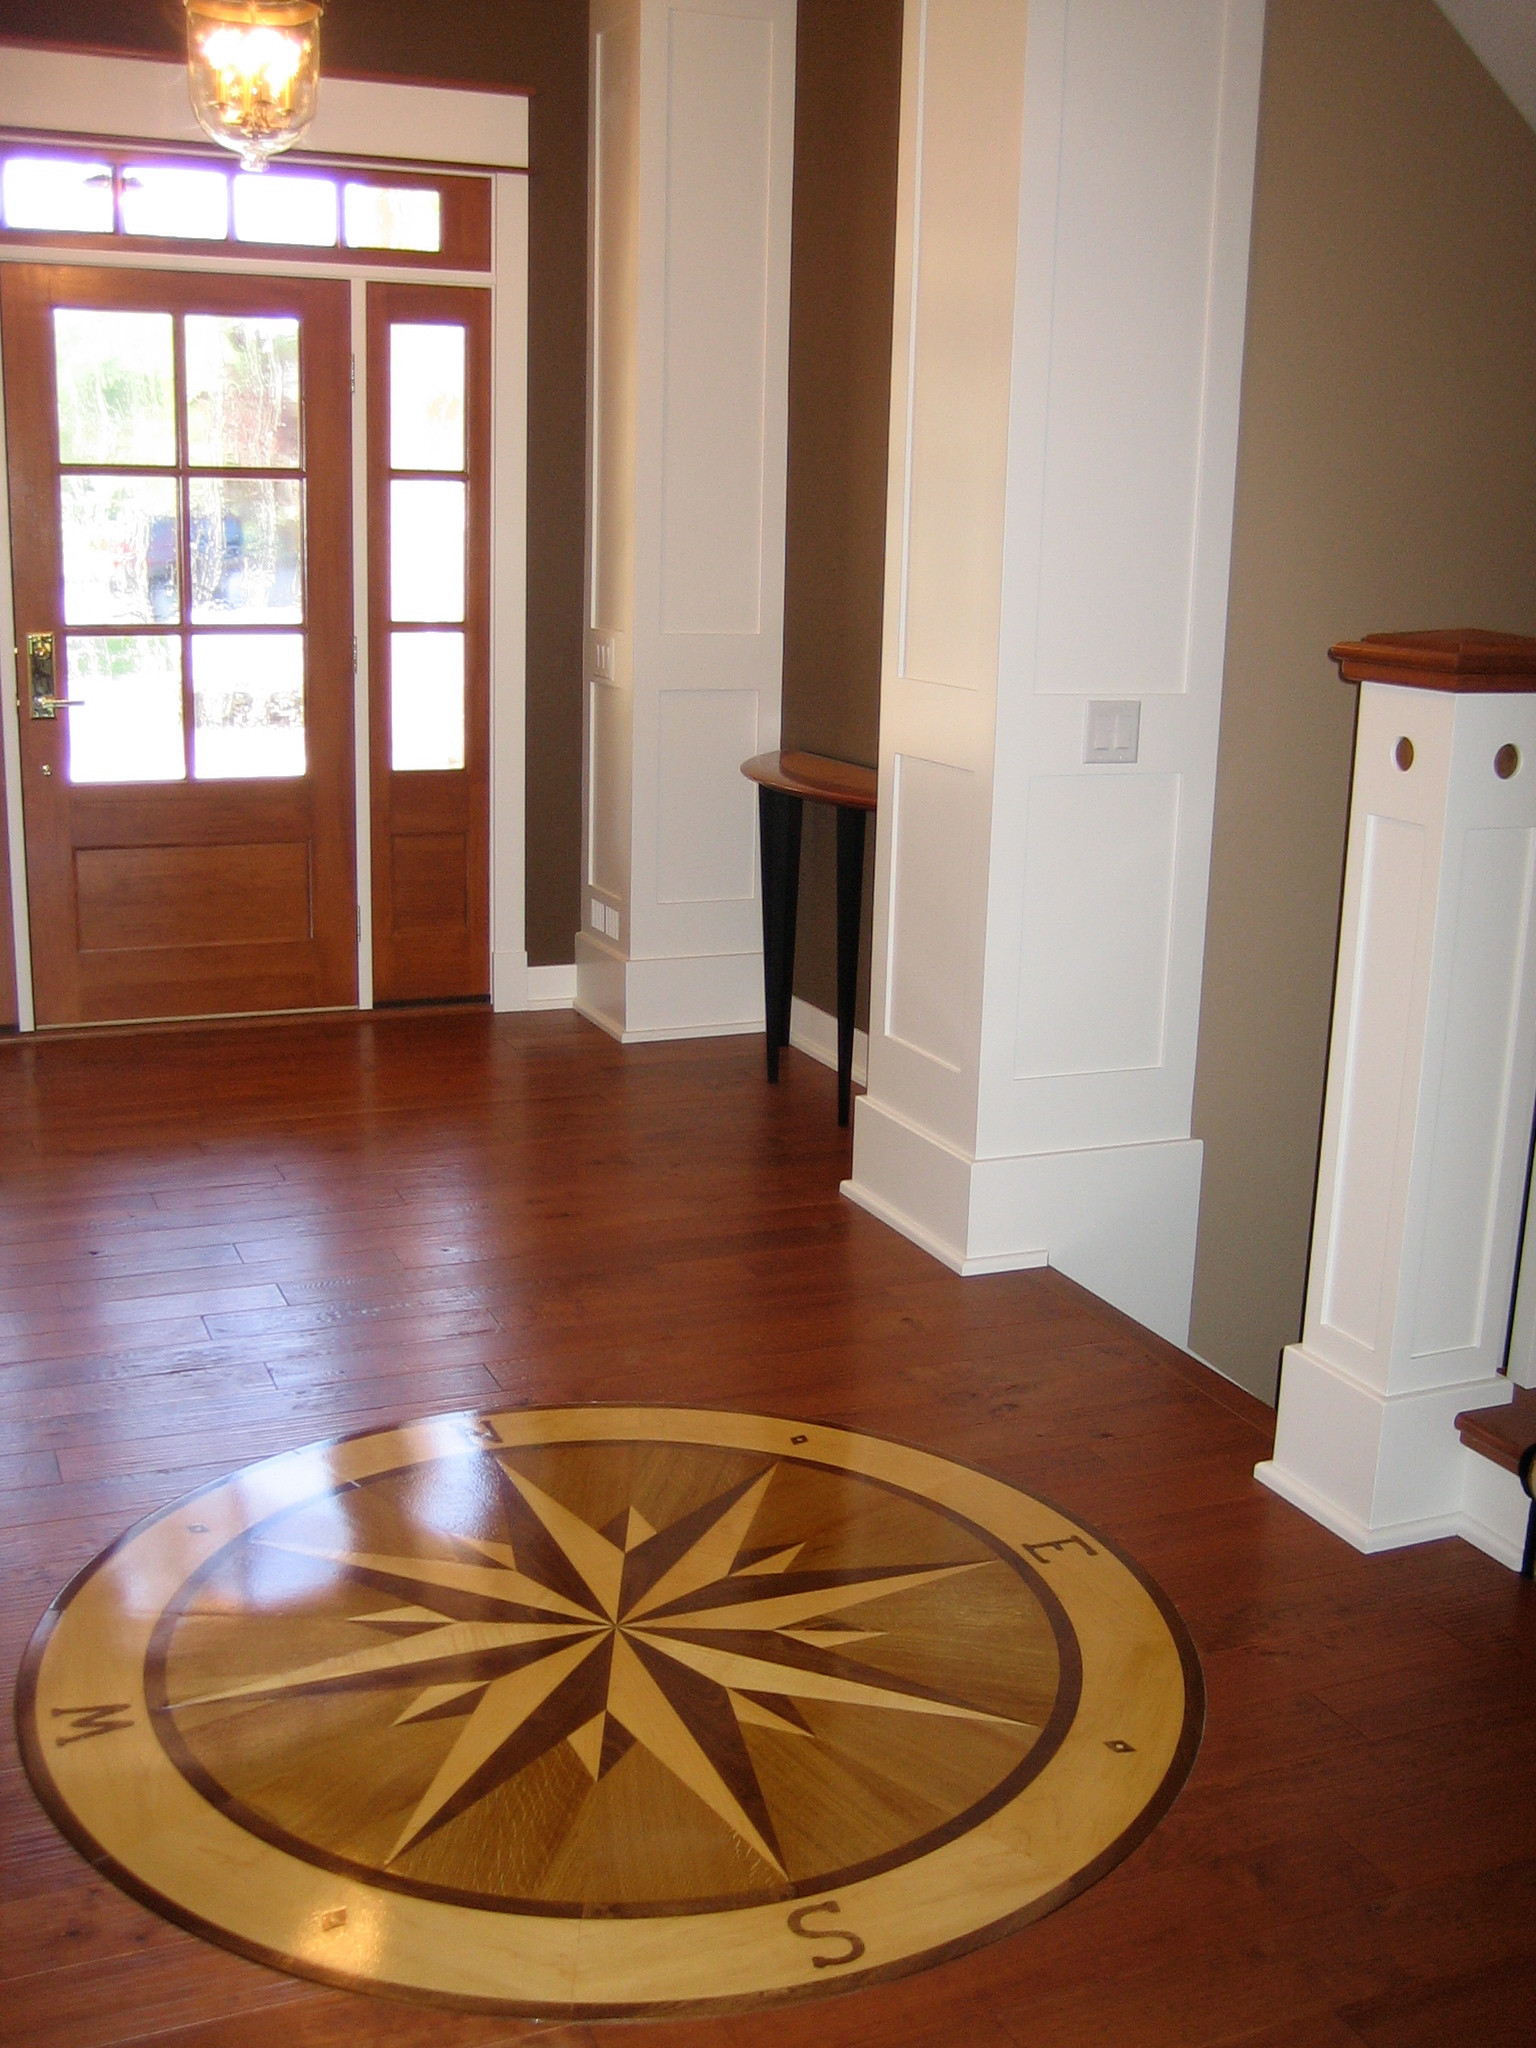 24" Wood Floor Inlay 96 Piece Star Compass Medallion kit DIY Flooring Table Box